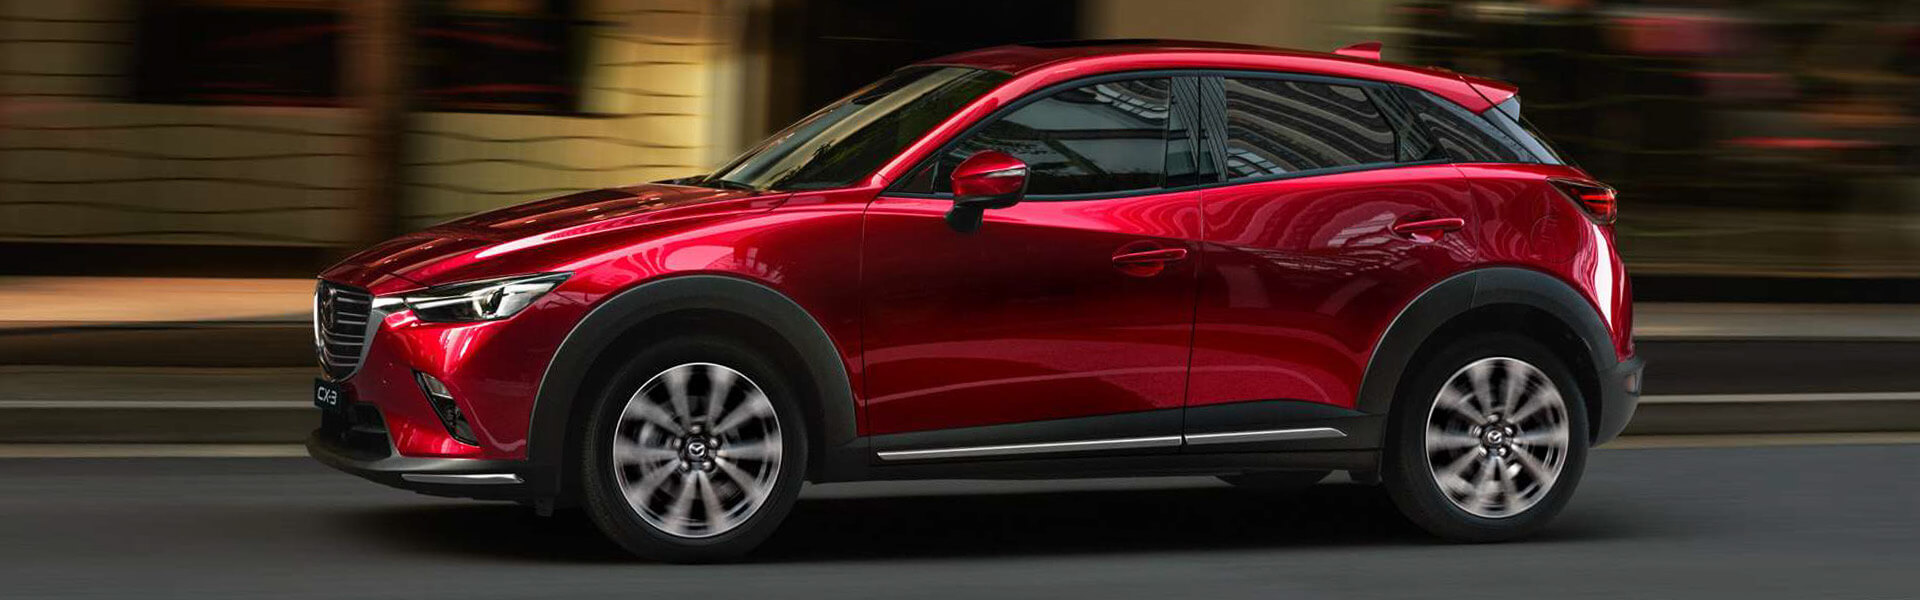 New Mazda Cx 3 For Sale Noosa Mazda